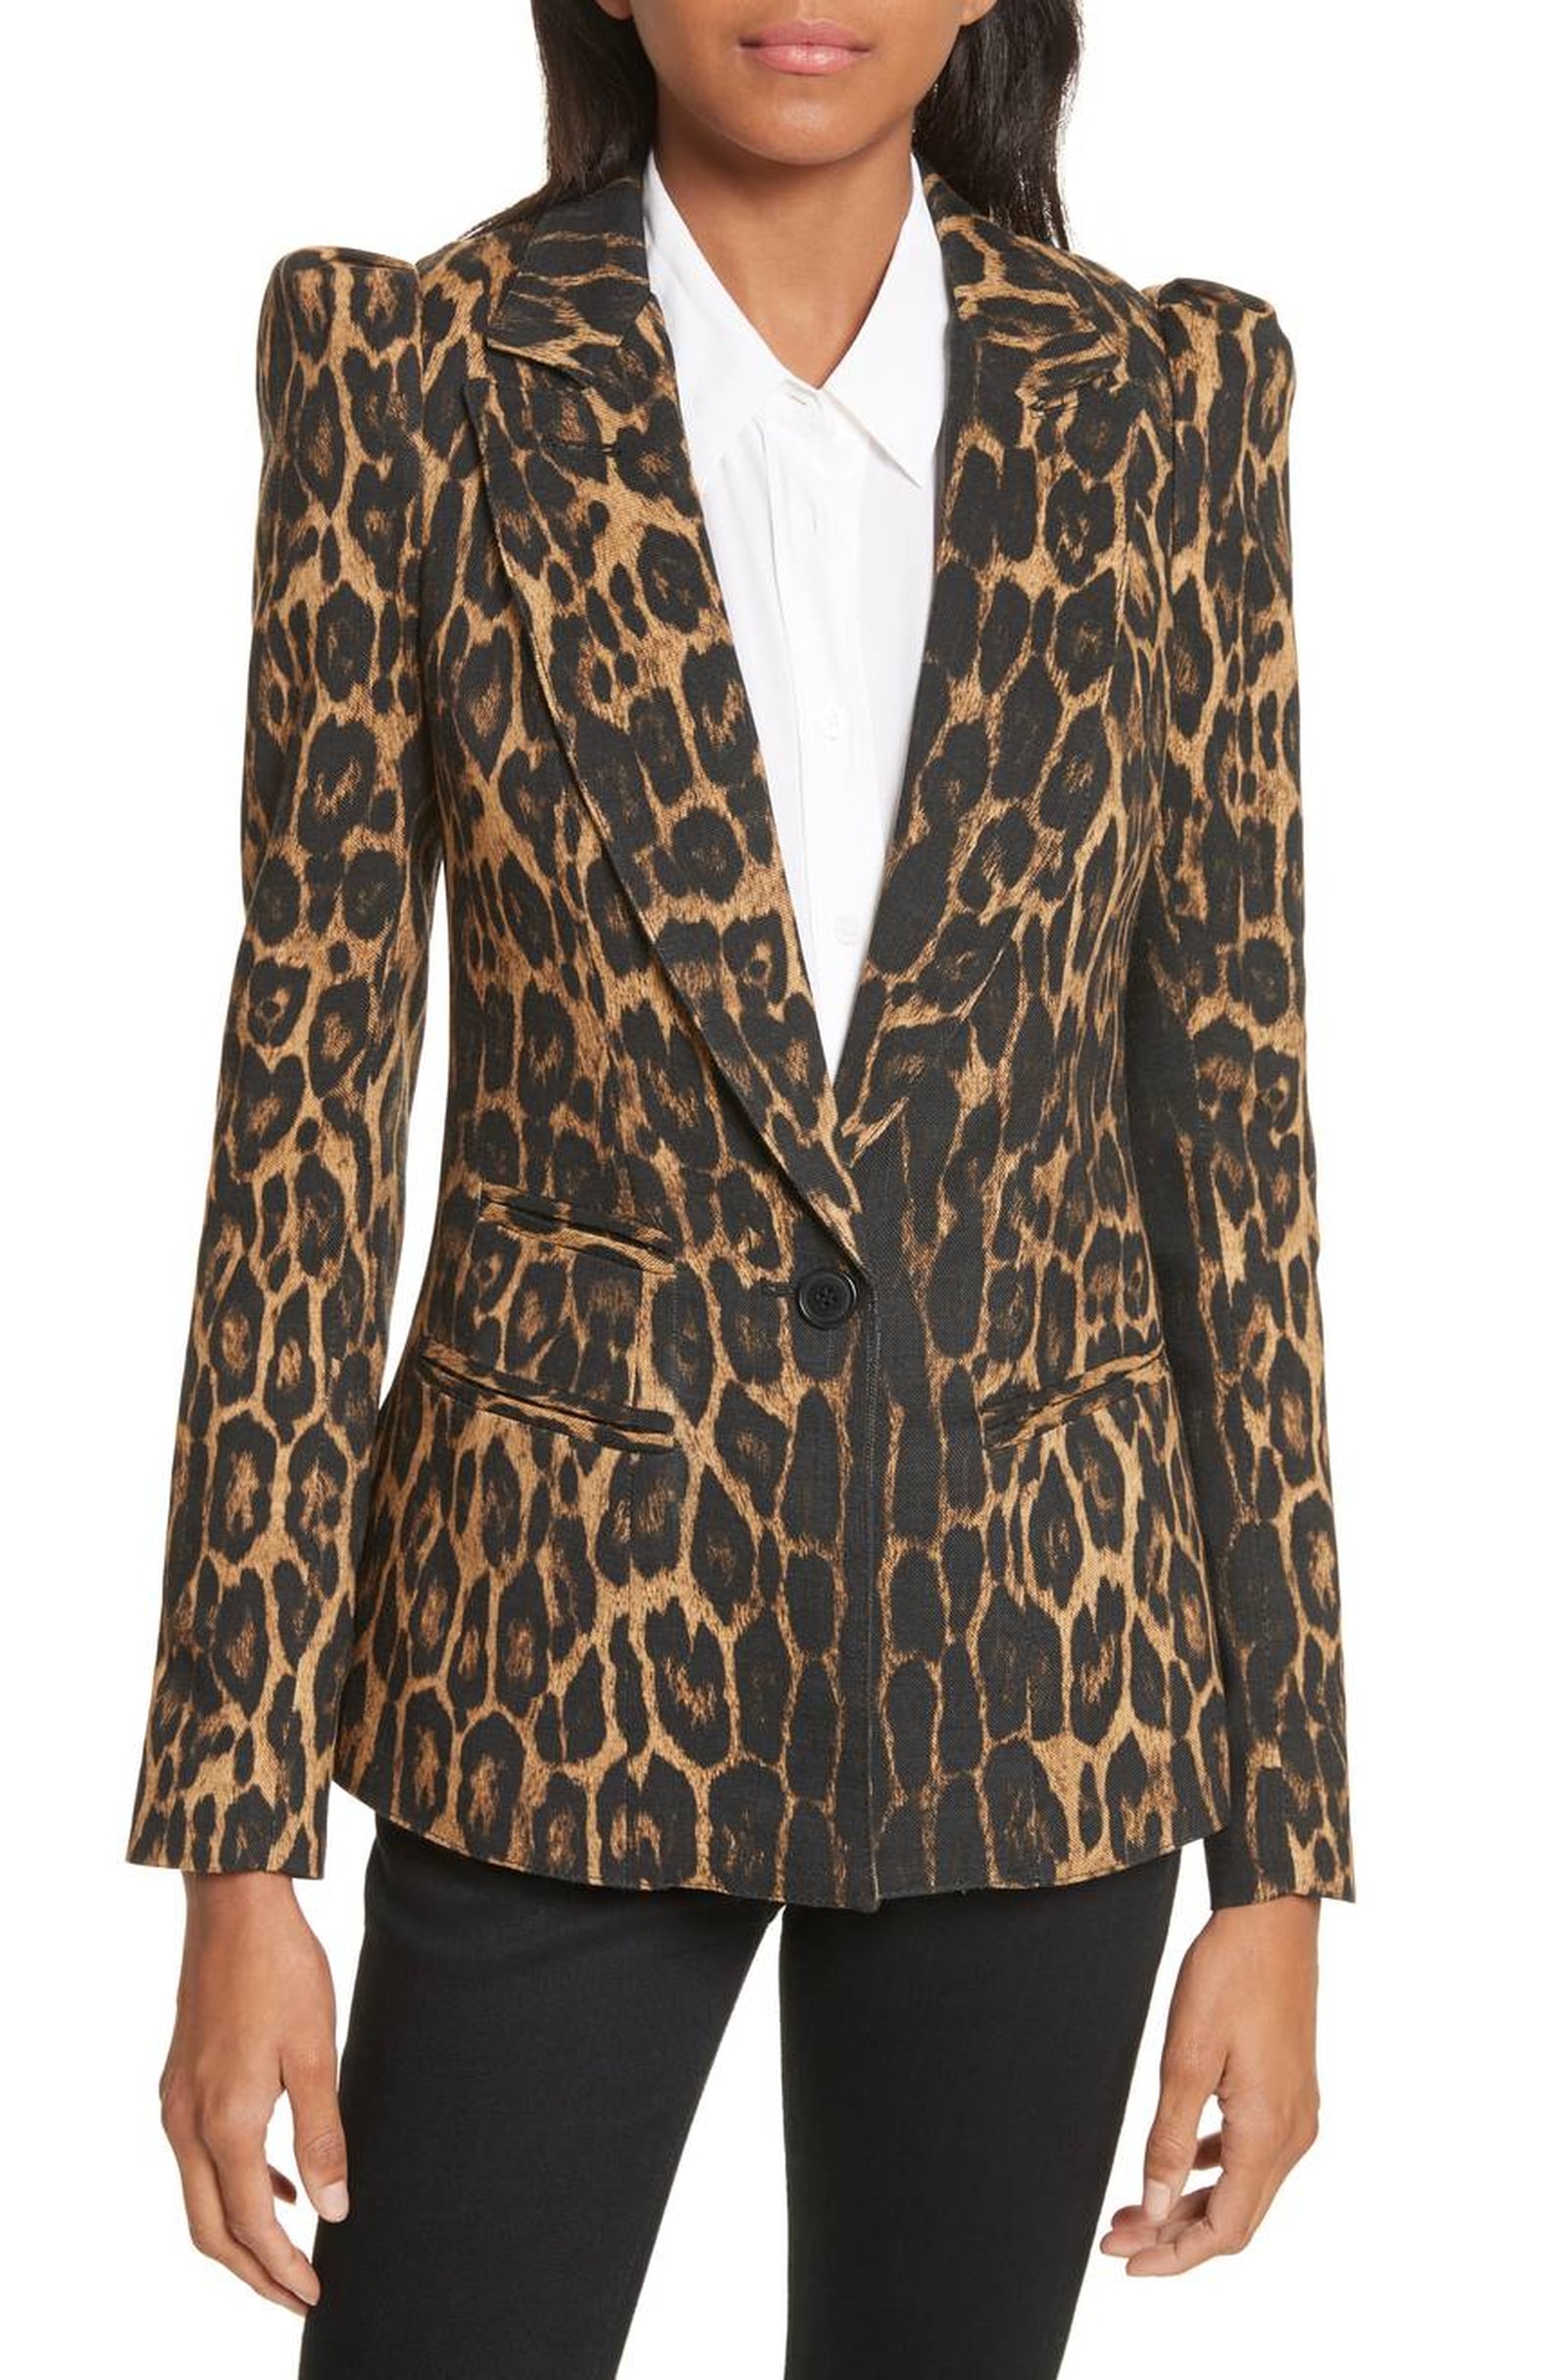 How to Wear Leopard Print | POPSUGAR Fashion